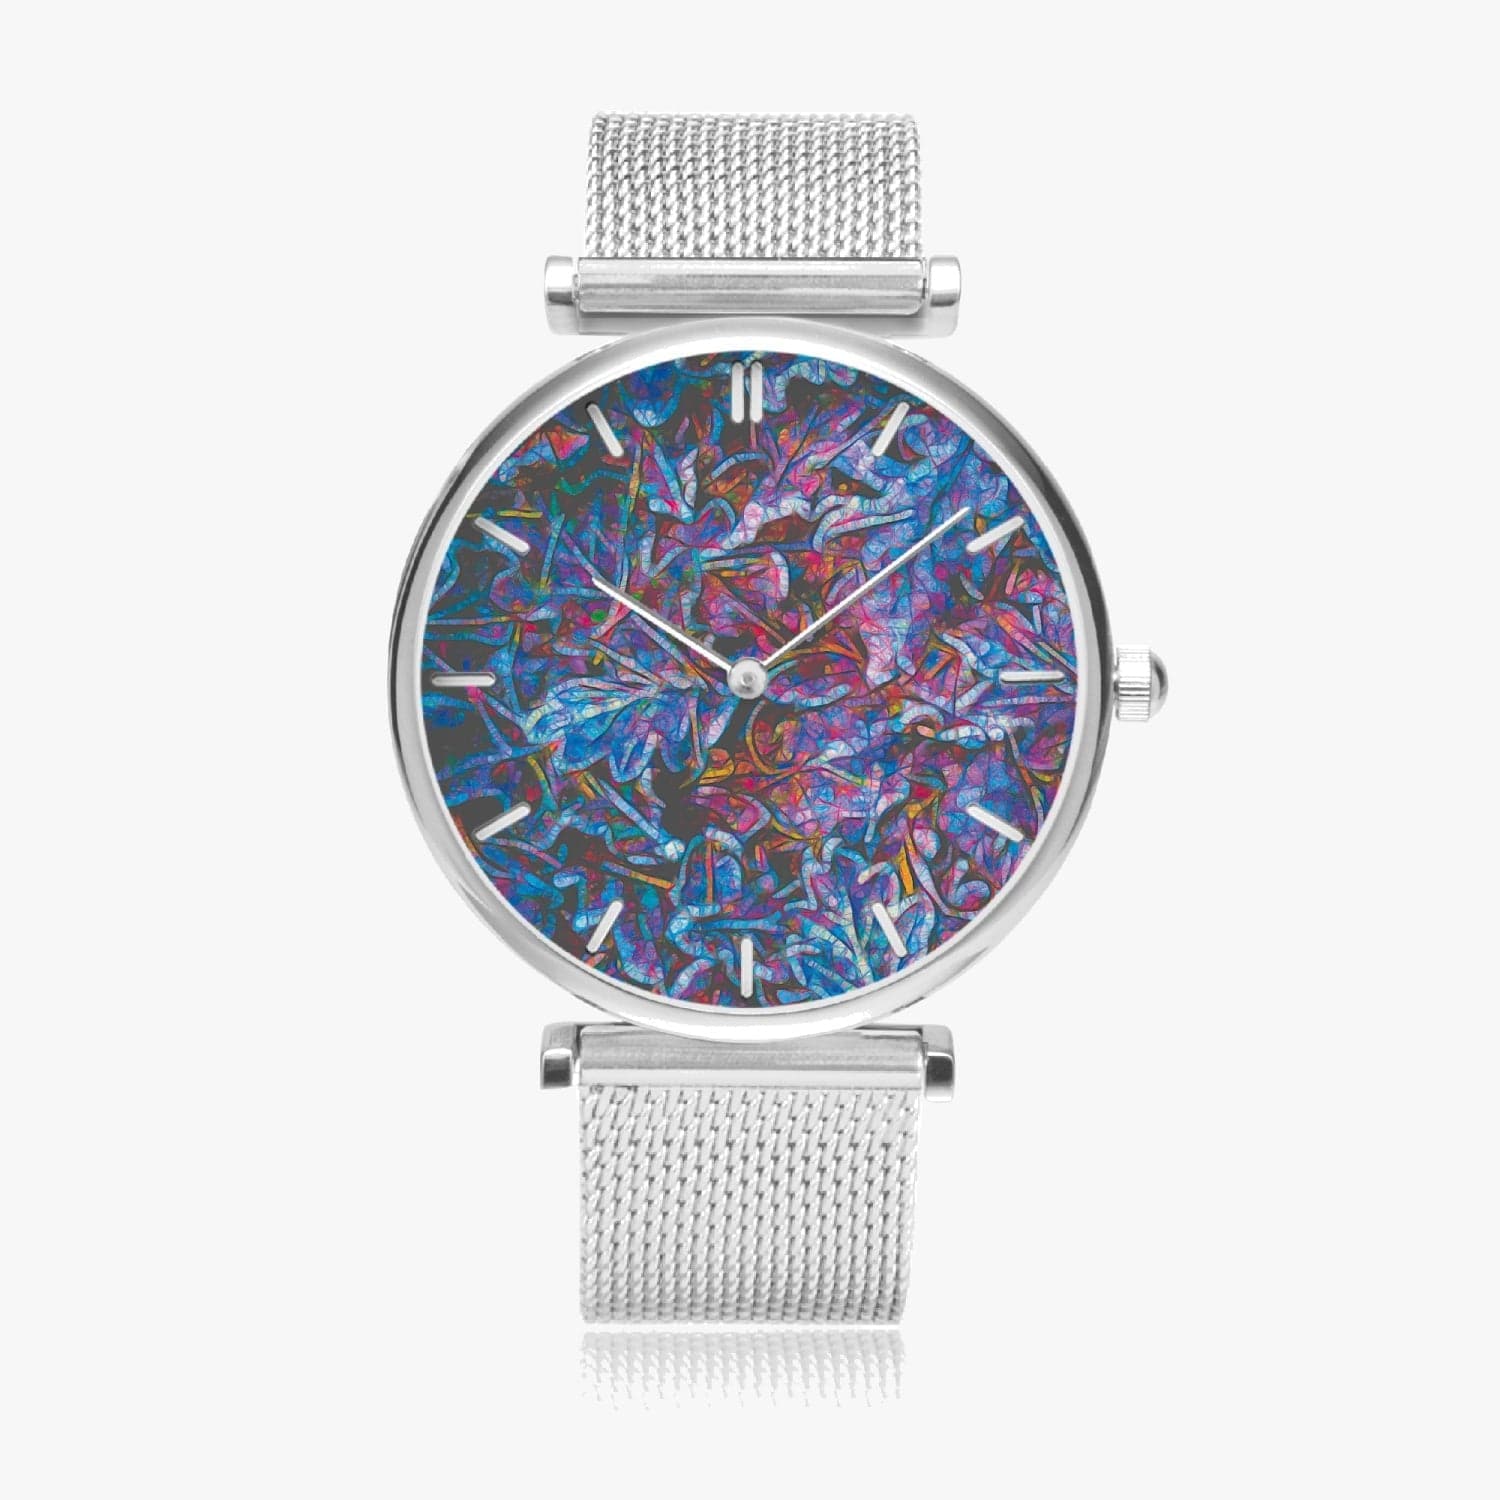 Frosted oak leafs, New Stylish Ultra-Thin Quartz Watch (With Indicators), by Sensus Studio Design